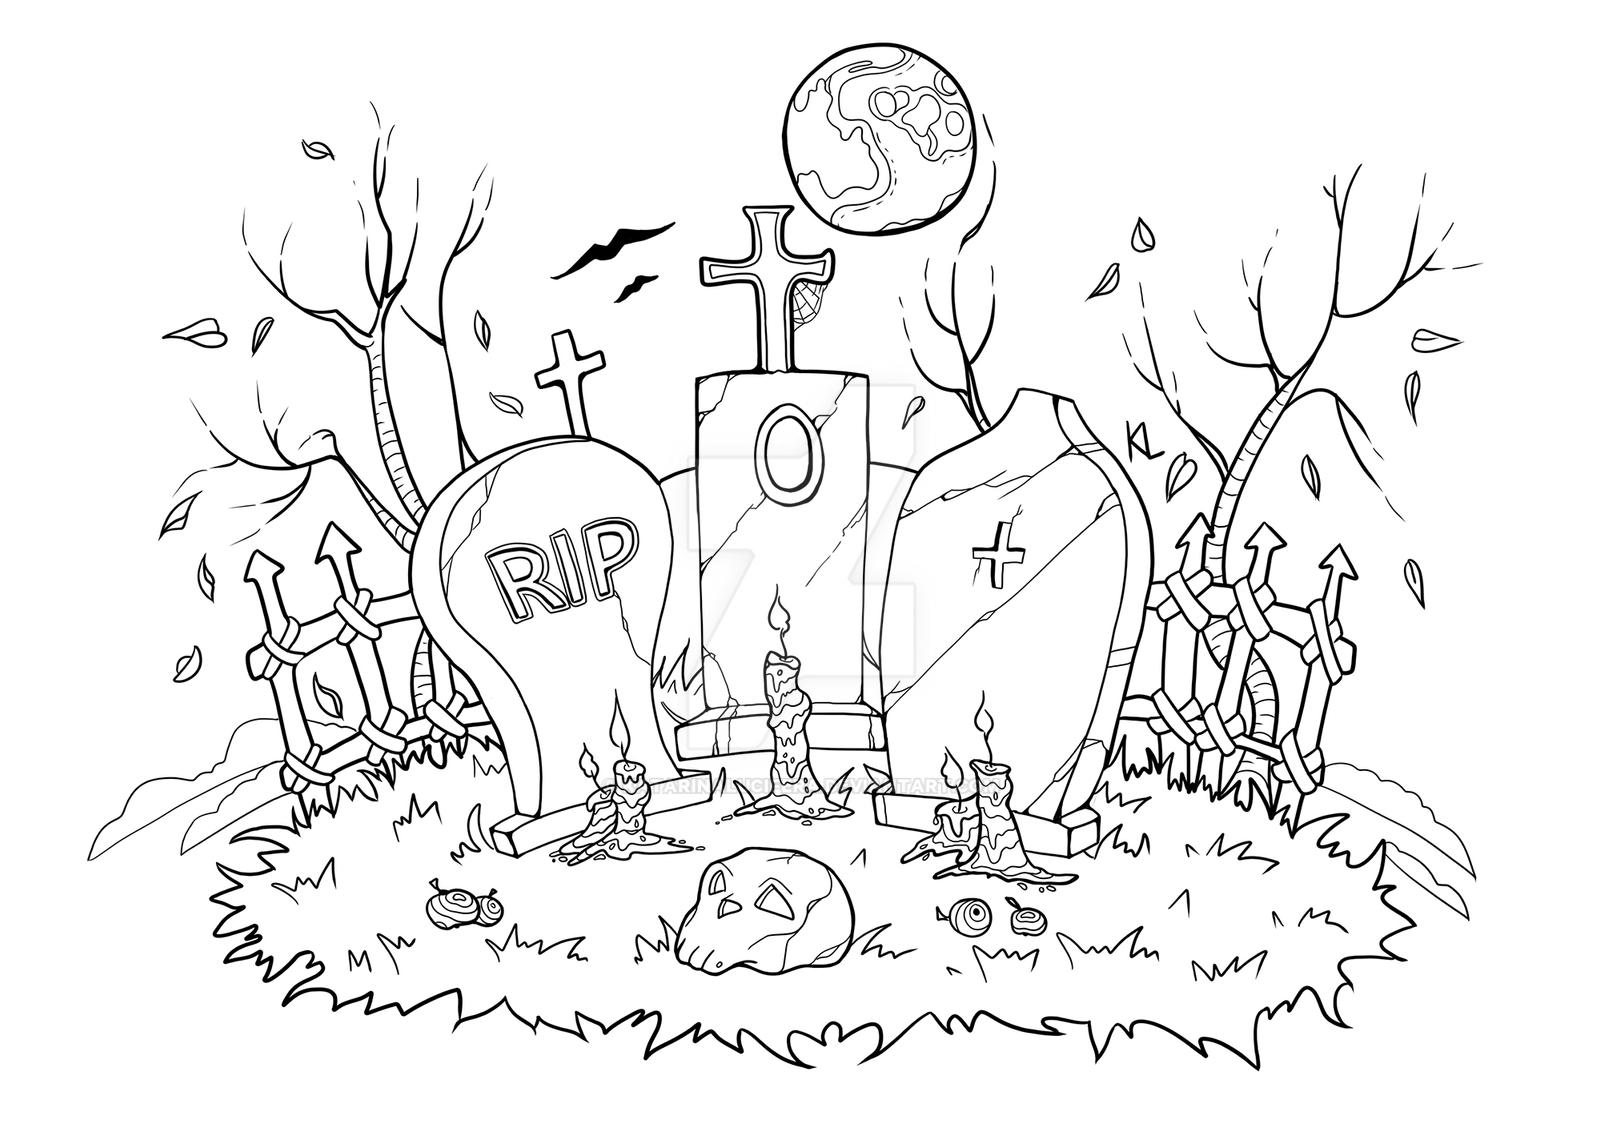 Halloween coloring book graveyard by katarinalucifera on